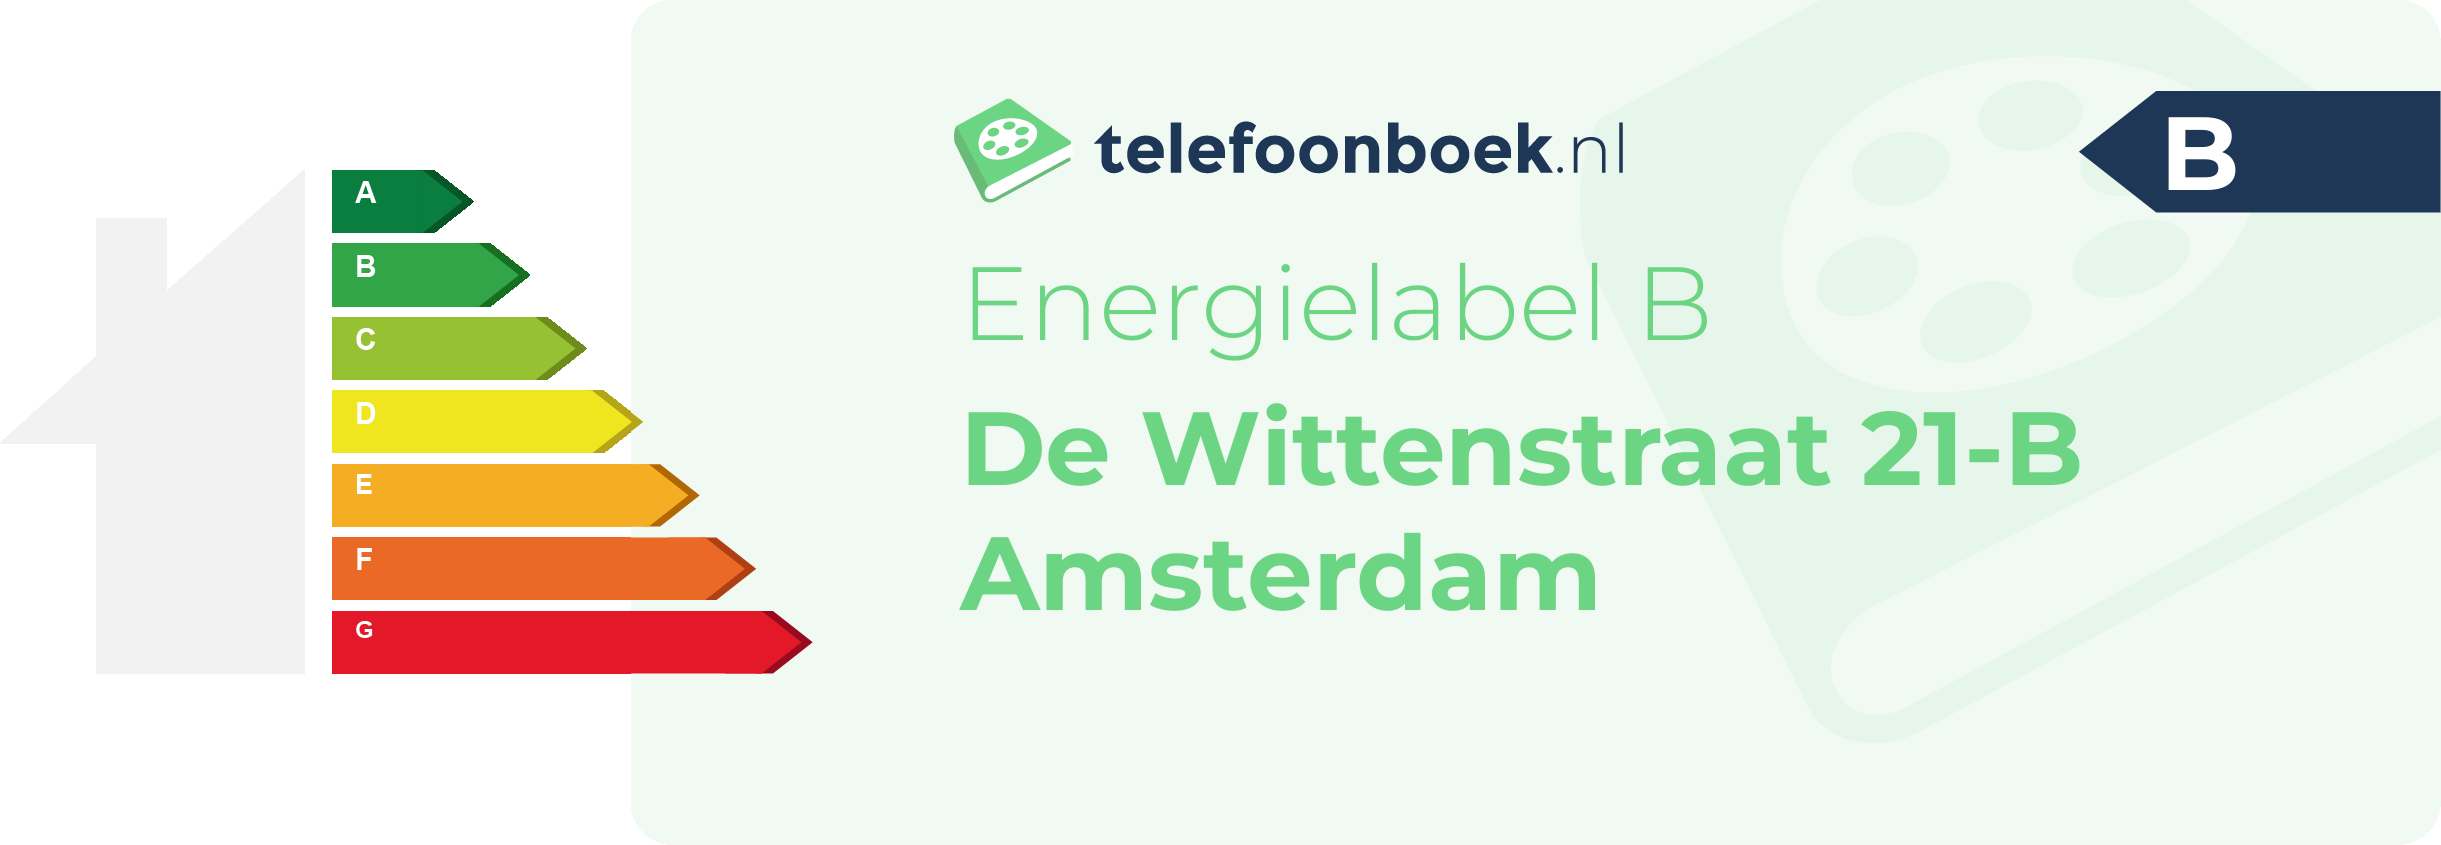 Energielabel De Wittenstraat 21-B Amsterdam